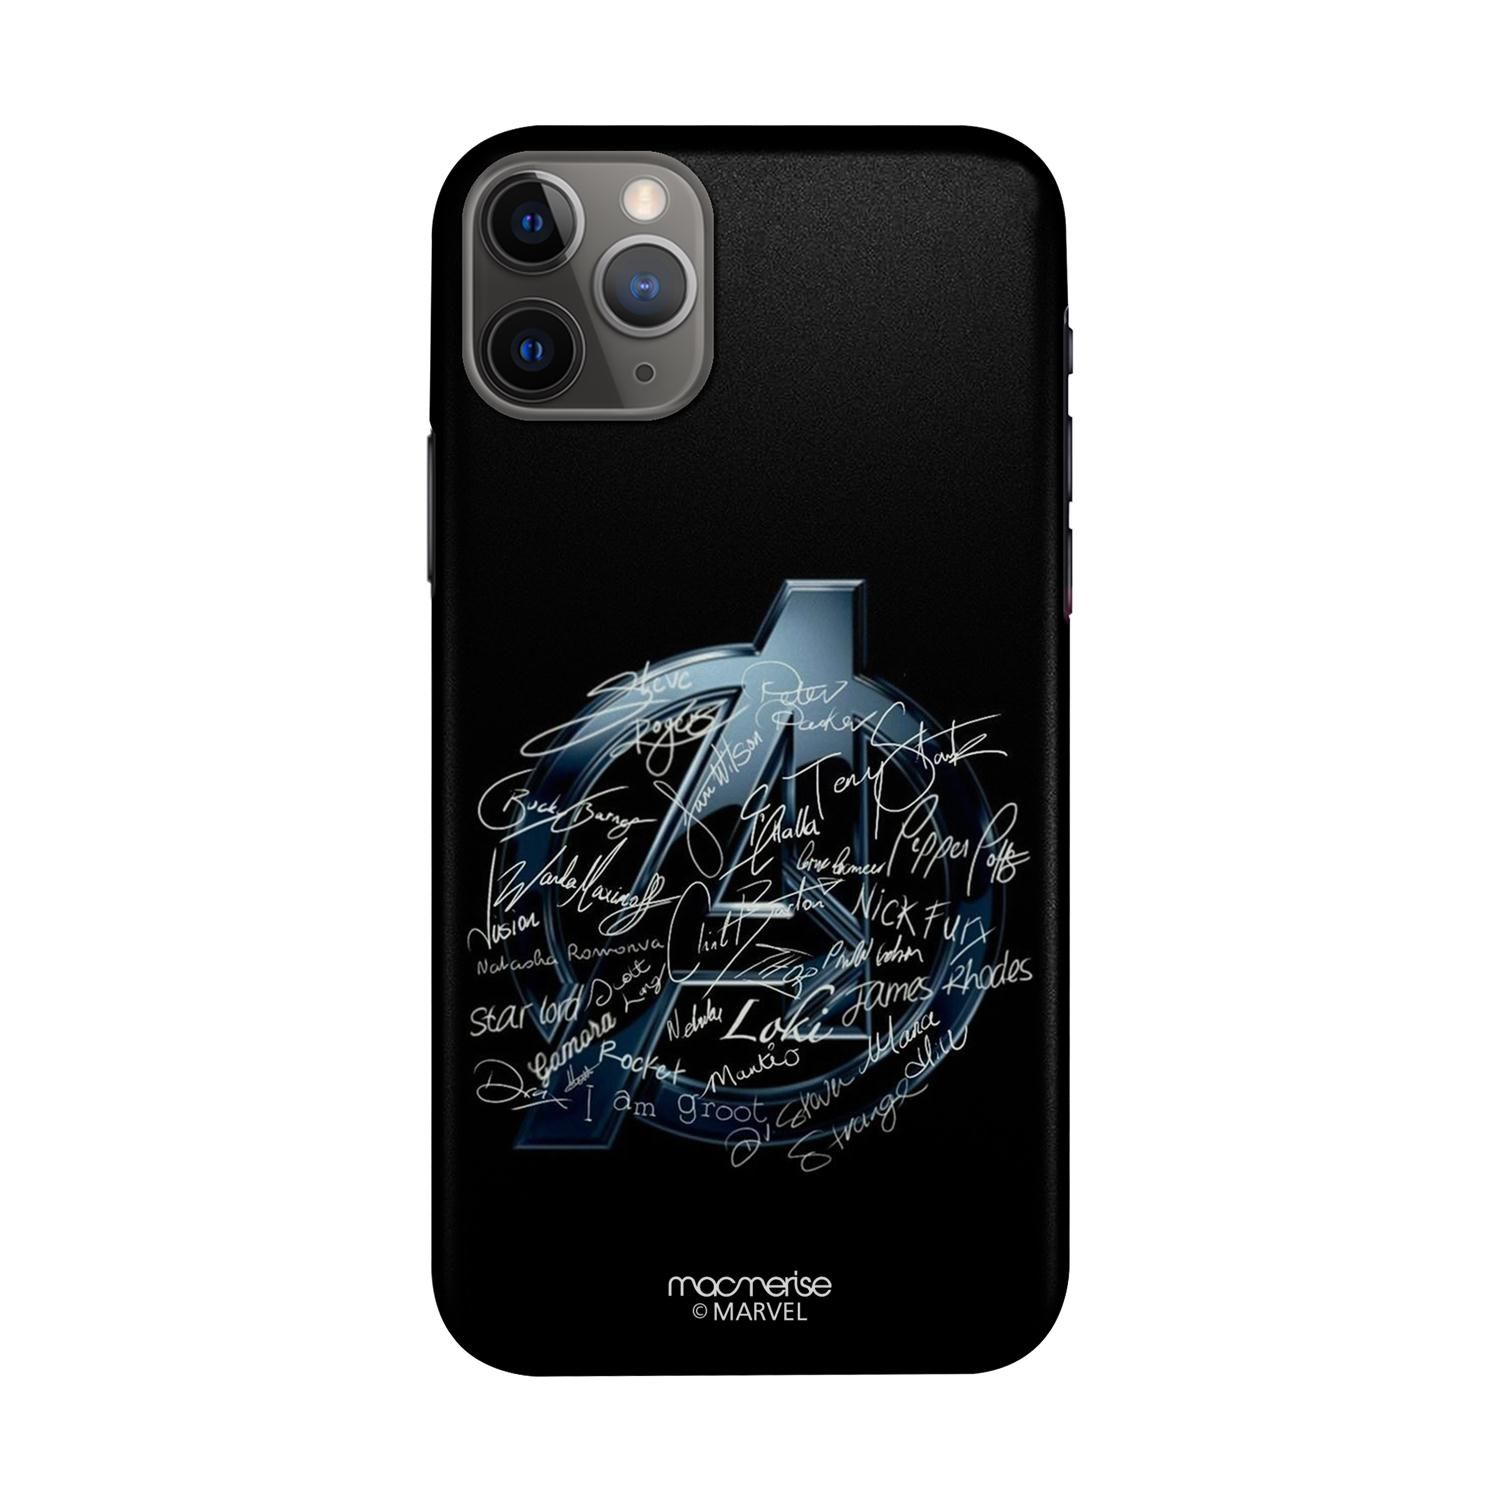 Buy Avengers Nostalgia - Sleek Phone Case for iPhone 11 Pro Max Online